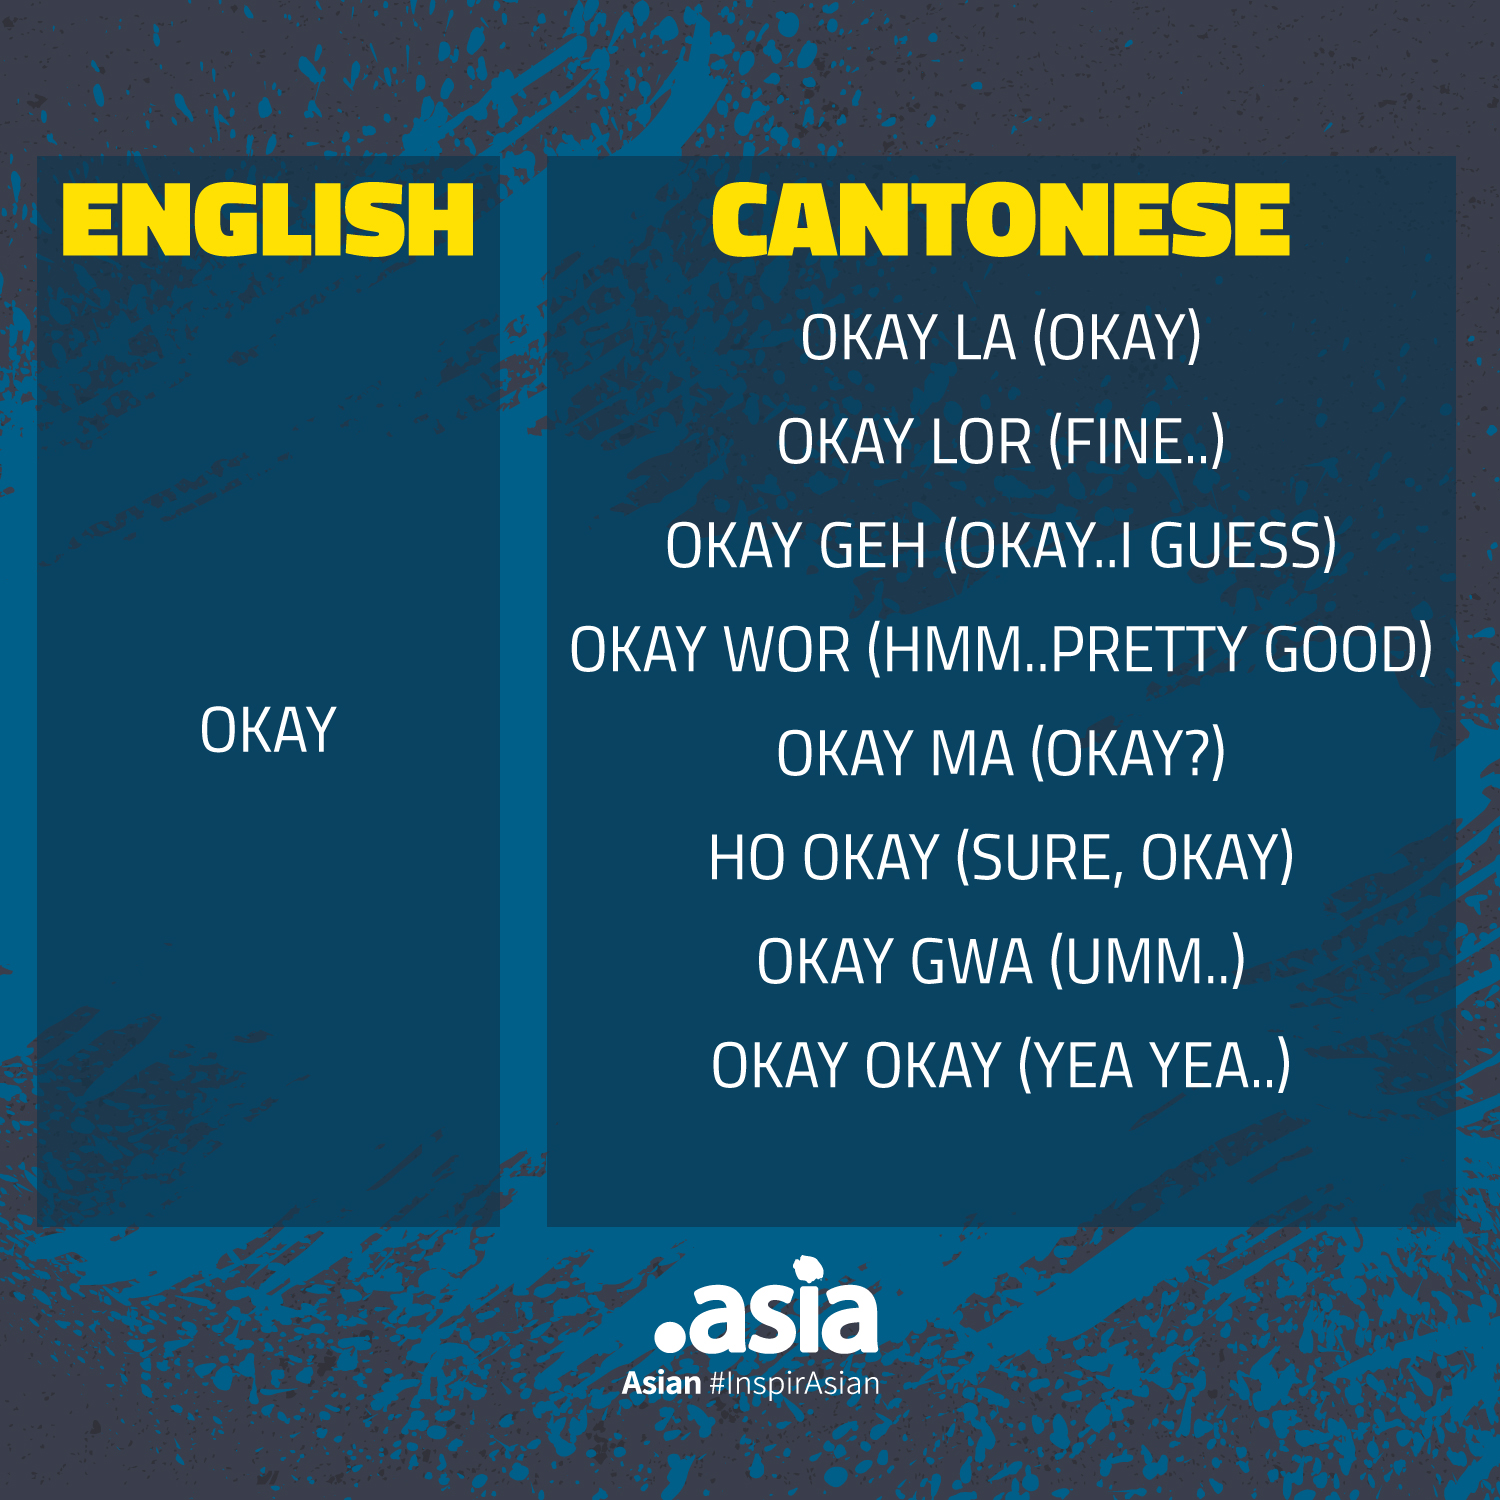 Image: English vs Cantonese for phrase 'OKAY'